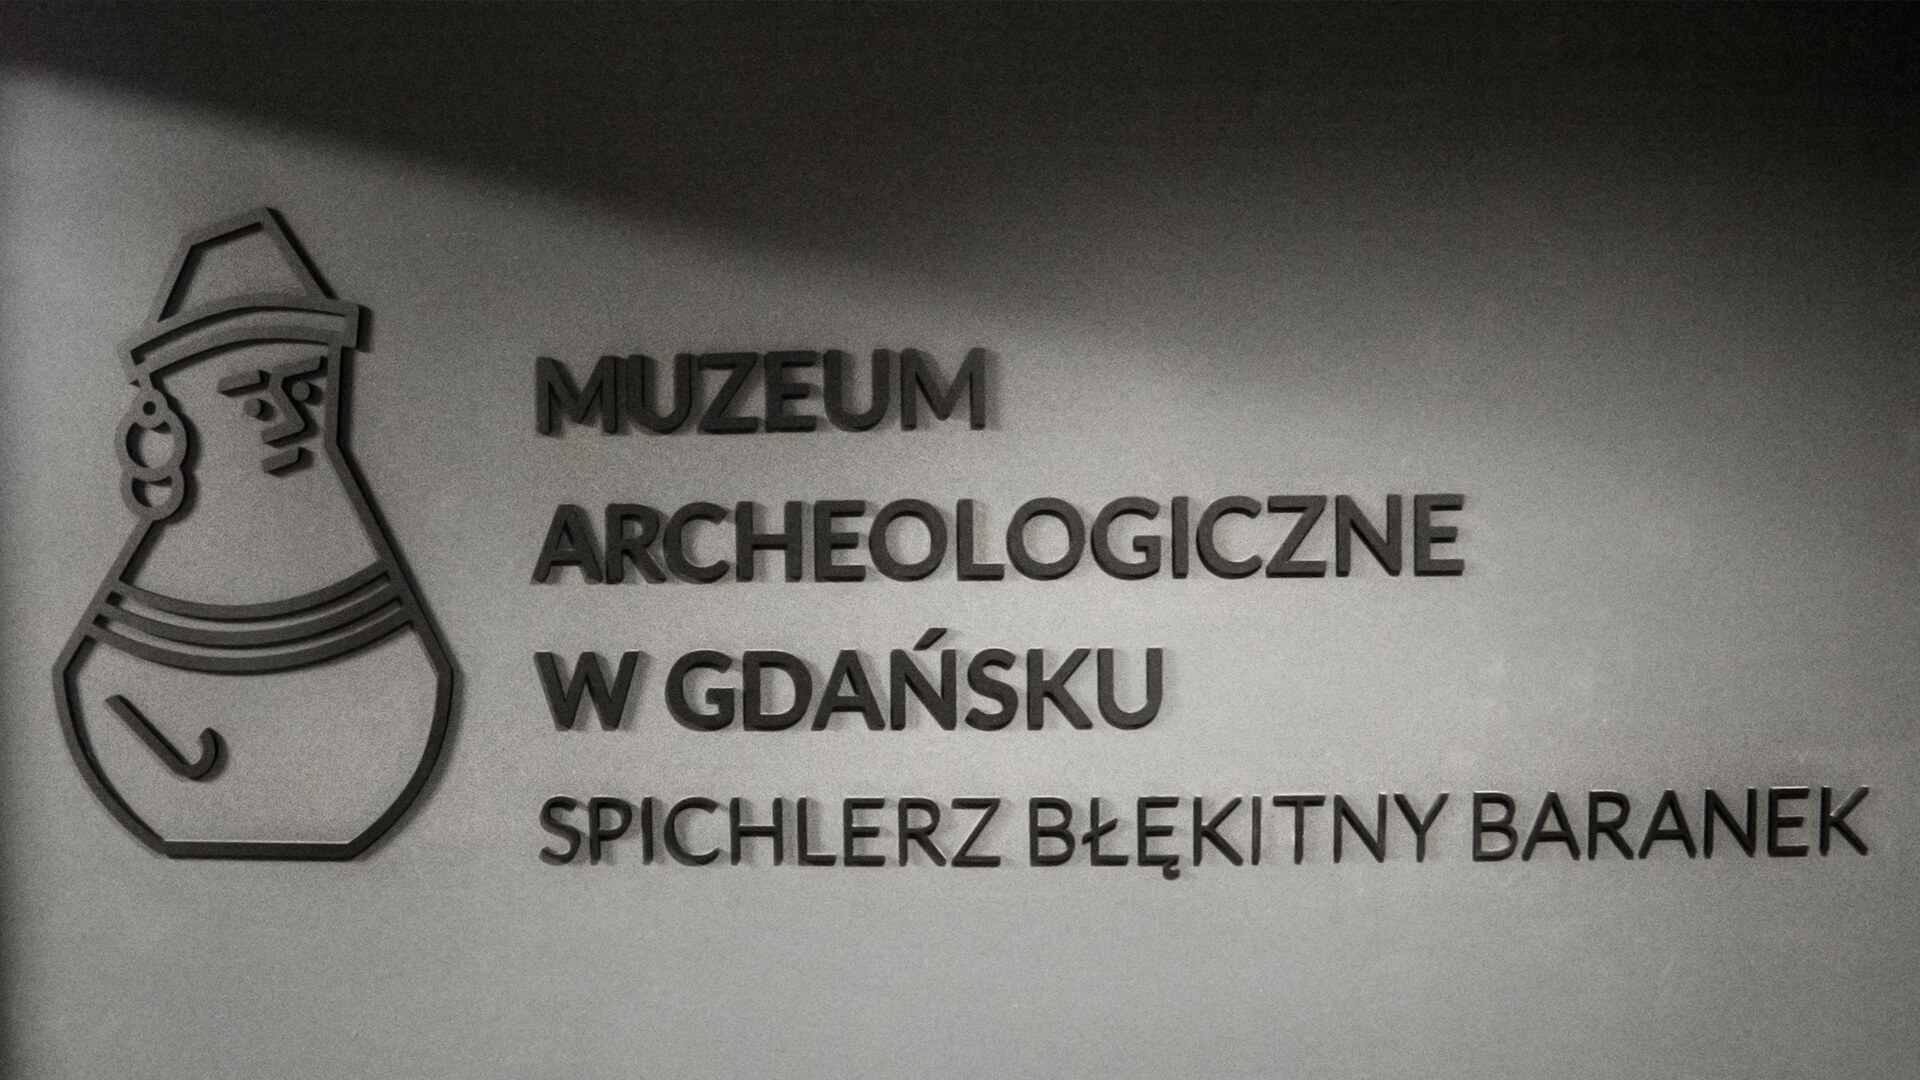 Museum blaues Schafsfell - museum-archäologie-blauer-backstein-raumbeschriftung-an-der-wand-mit-einem-ziegel-innenverkleidung-empfang-schwarz-beschriftung-auf-trag-matt beschriftung-logo-firma